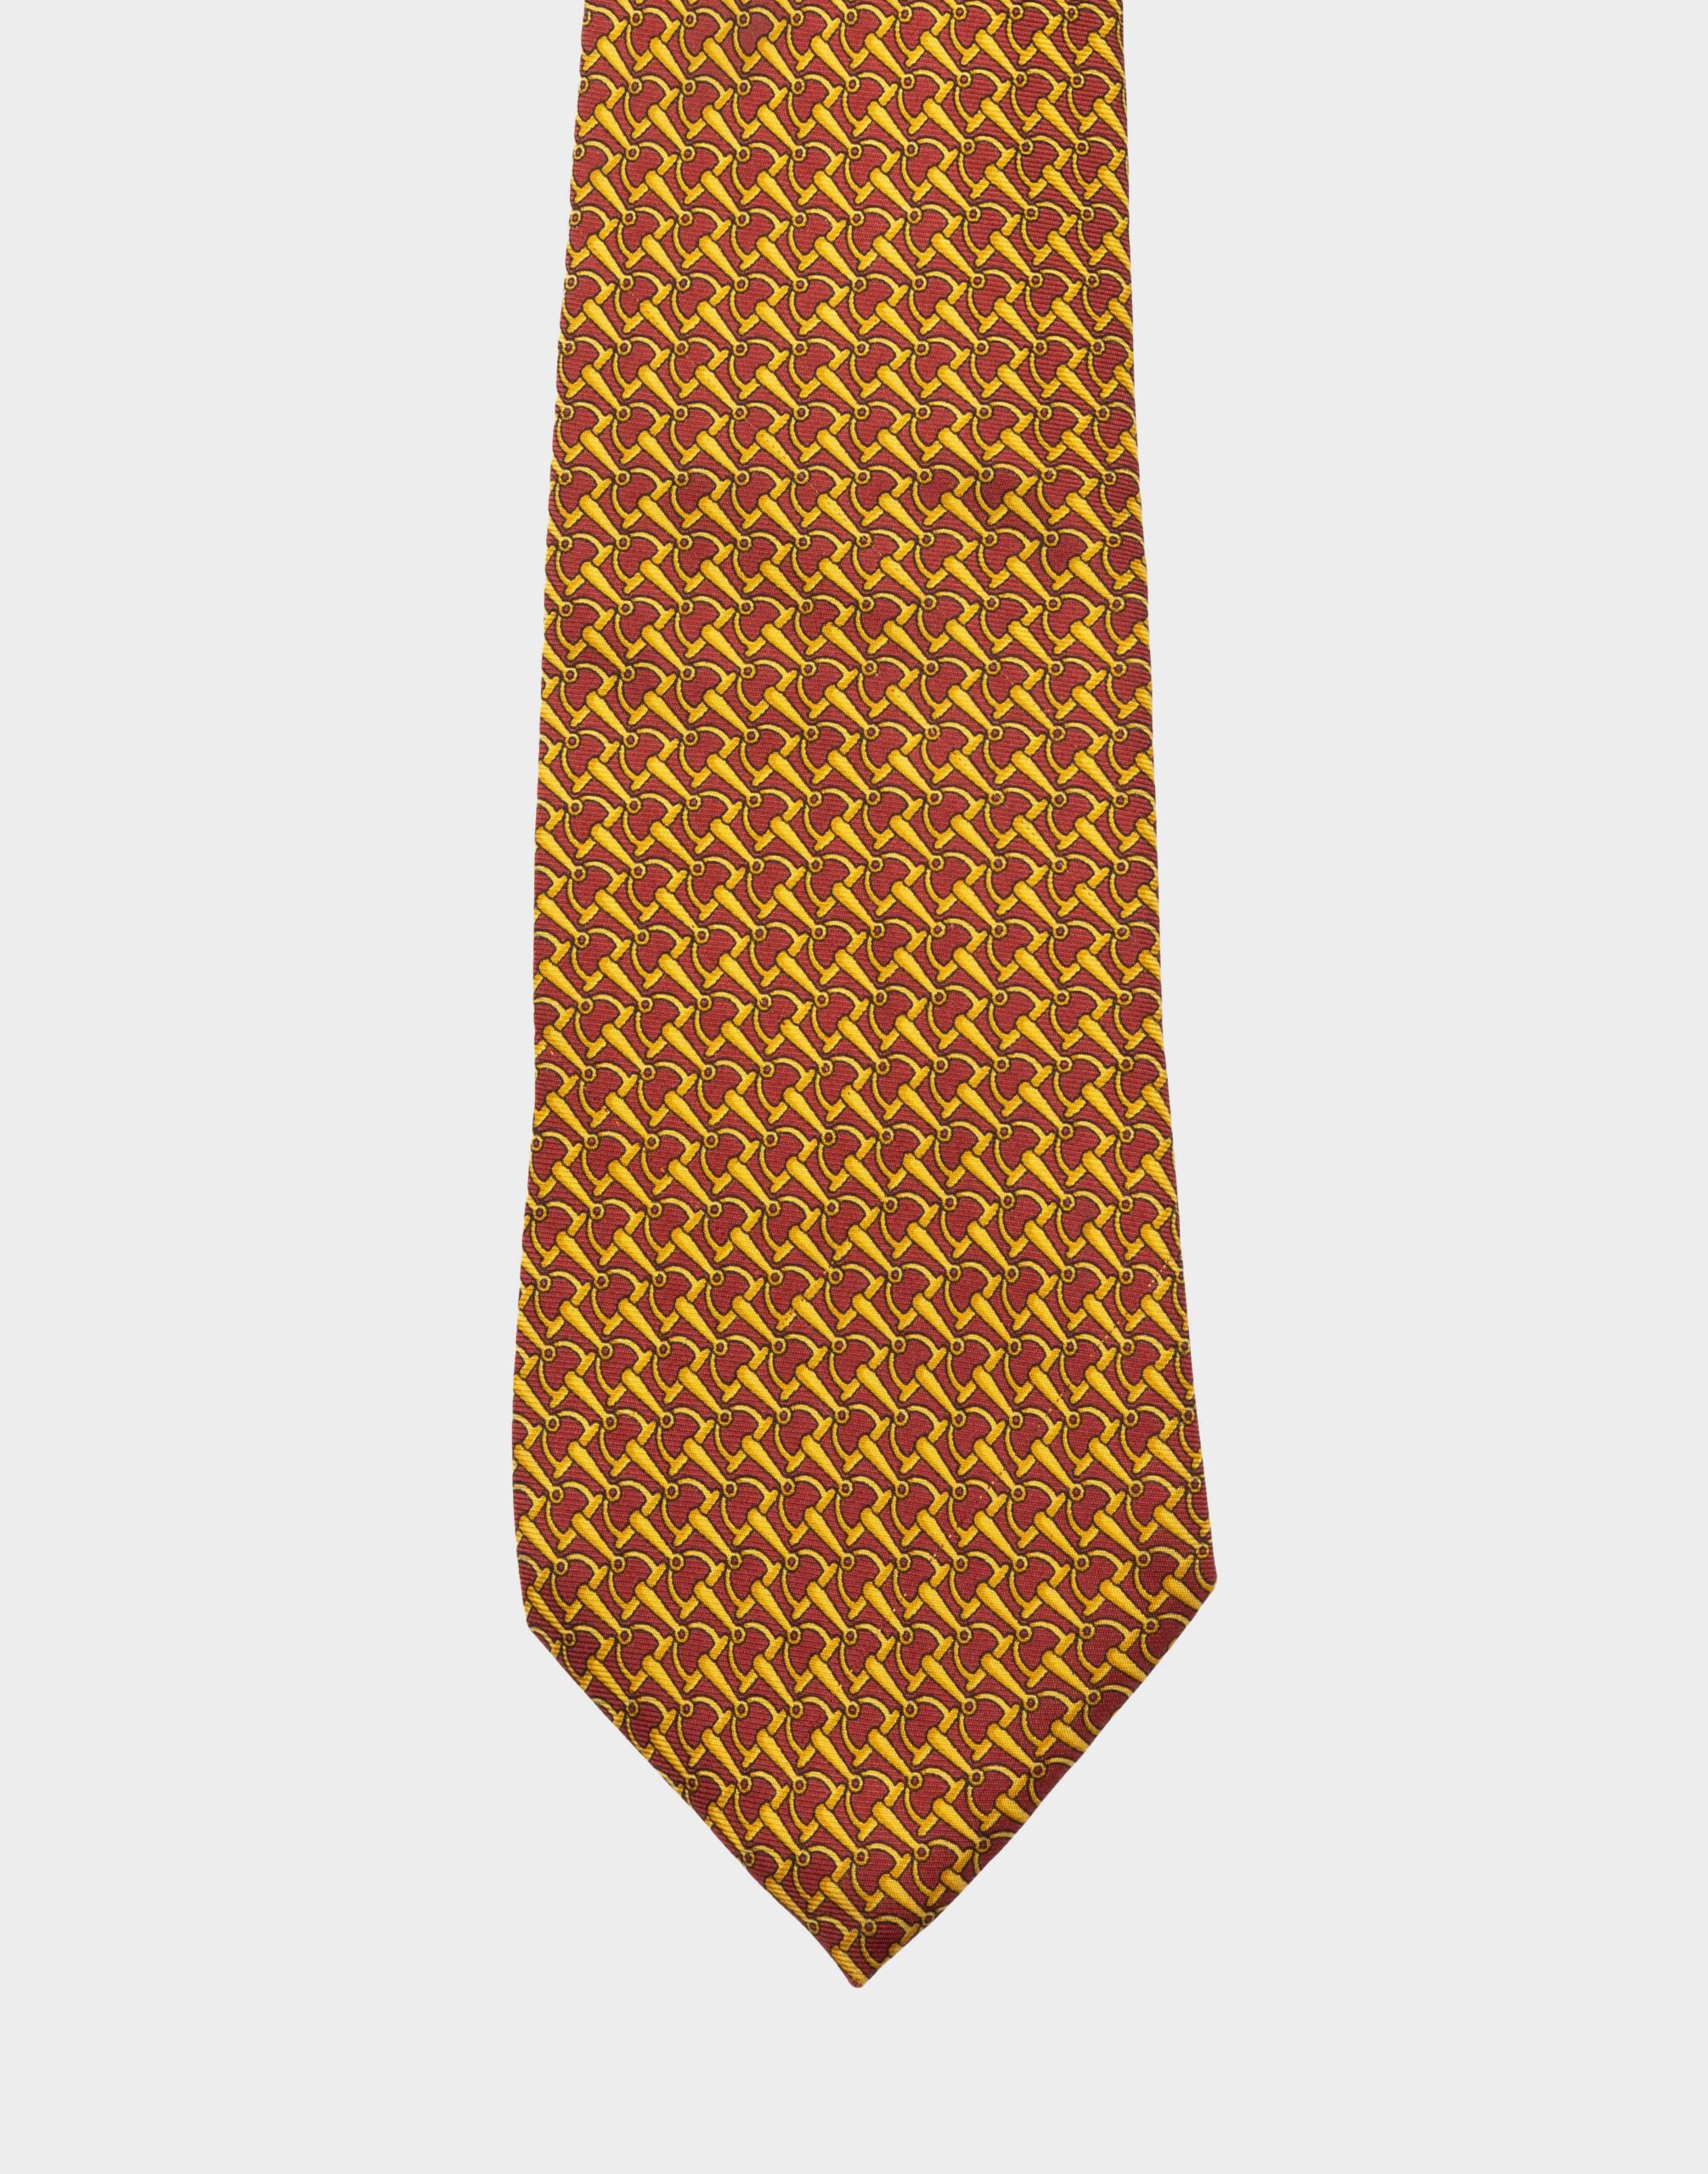 Burgundy silk tie with gold motif clips.